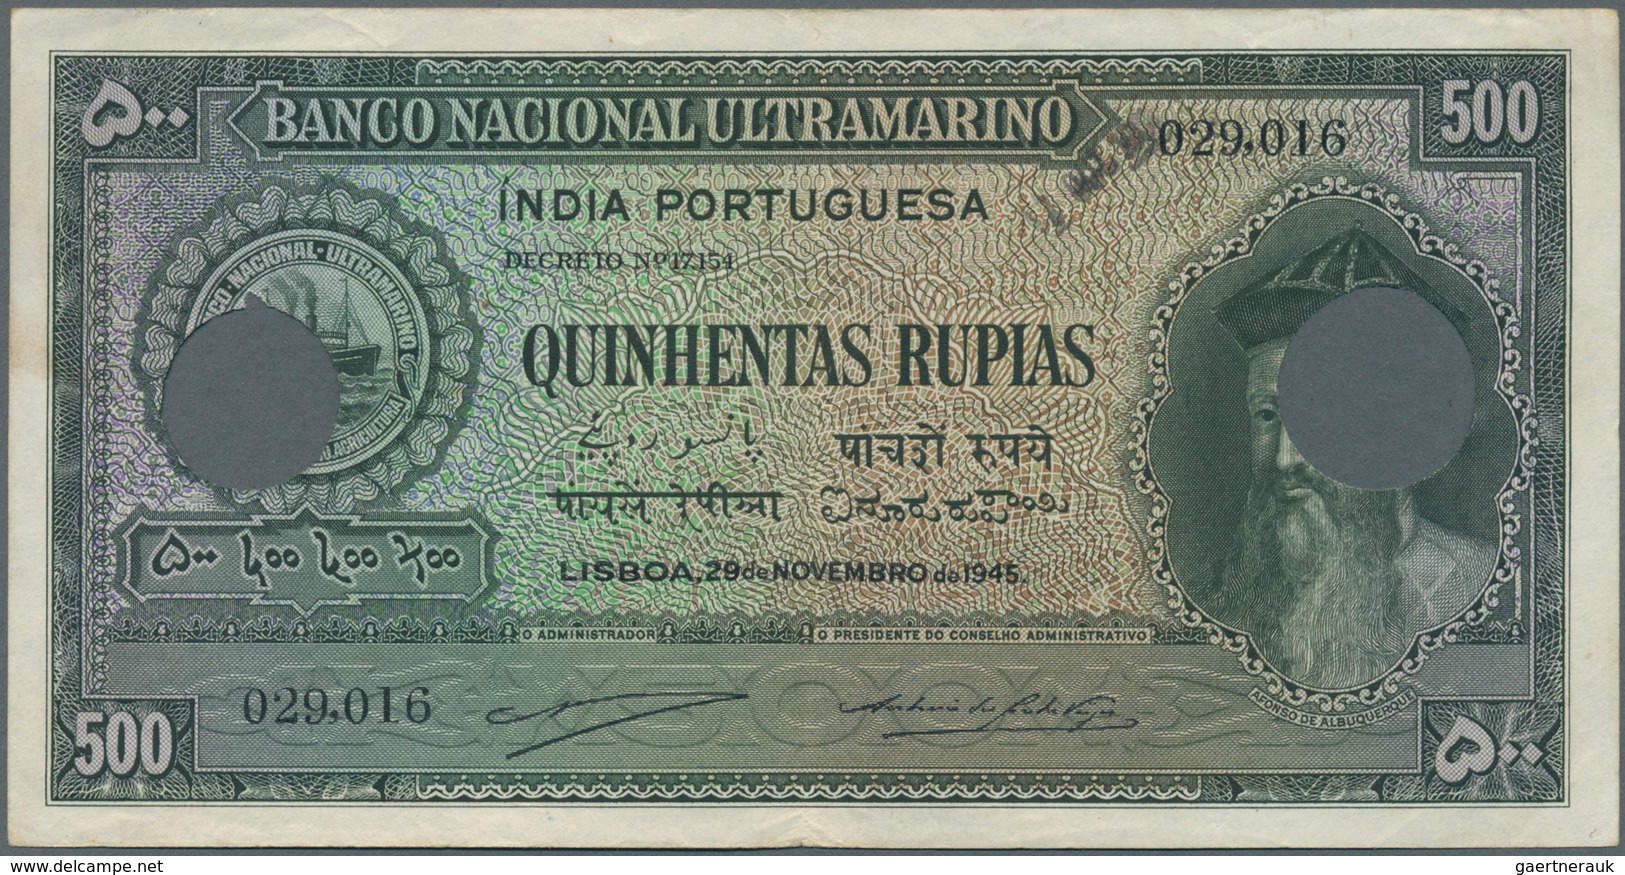 02240 Portuguese India / Portugiesisch Indien: Set Of 2 Notes Rare Denomination Of This Series 500 Rupias - India